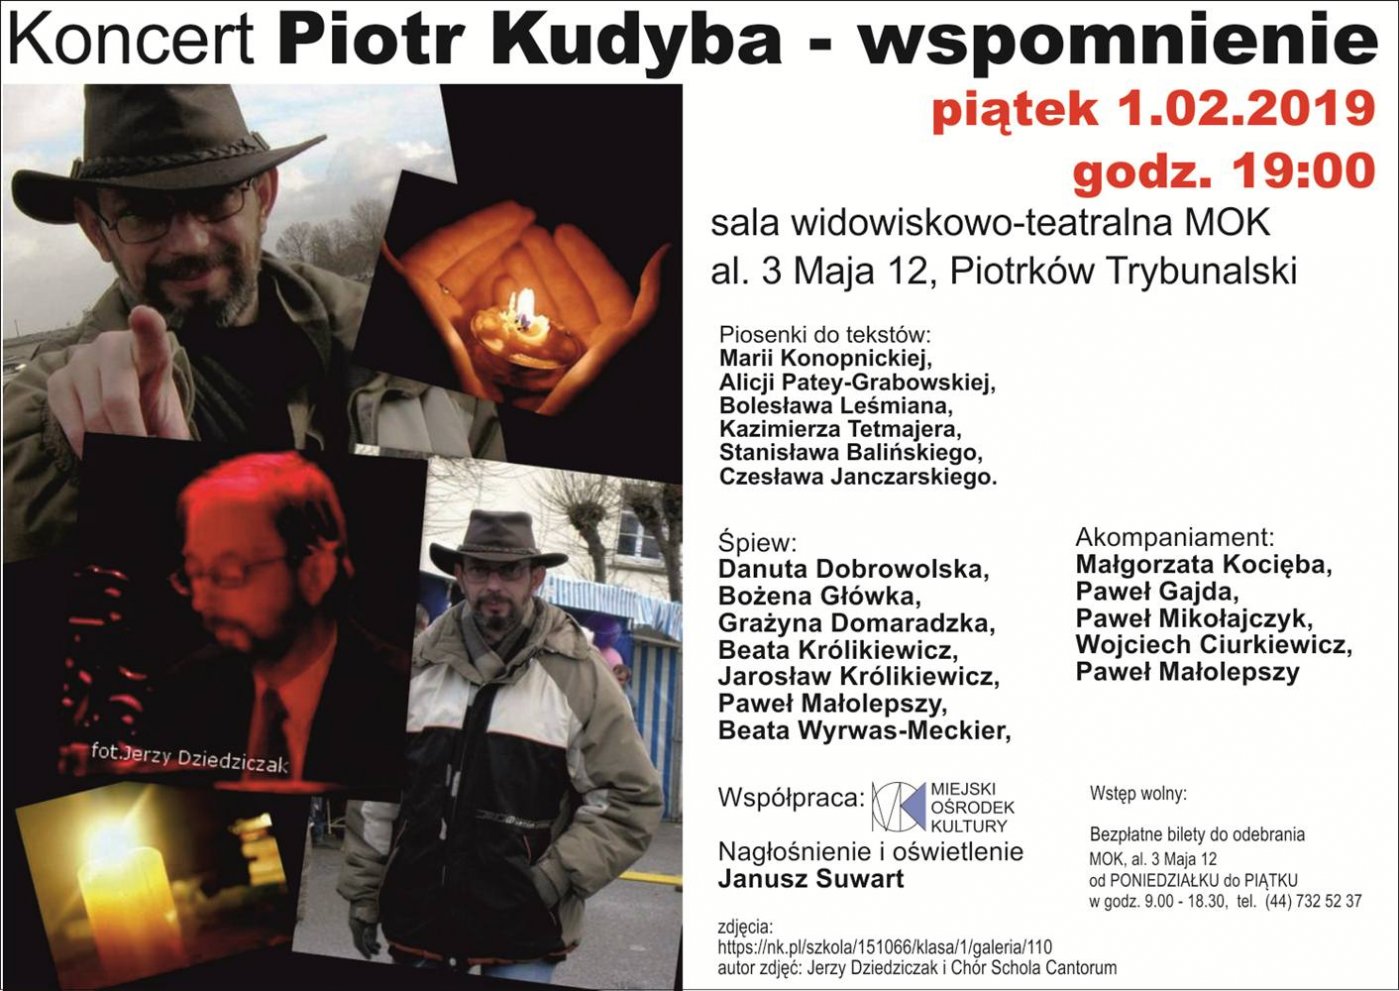 Koncert powicony pamici Piotra Kudyby 